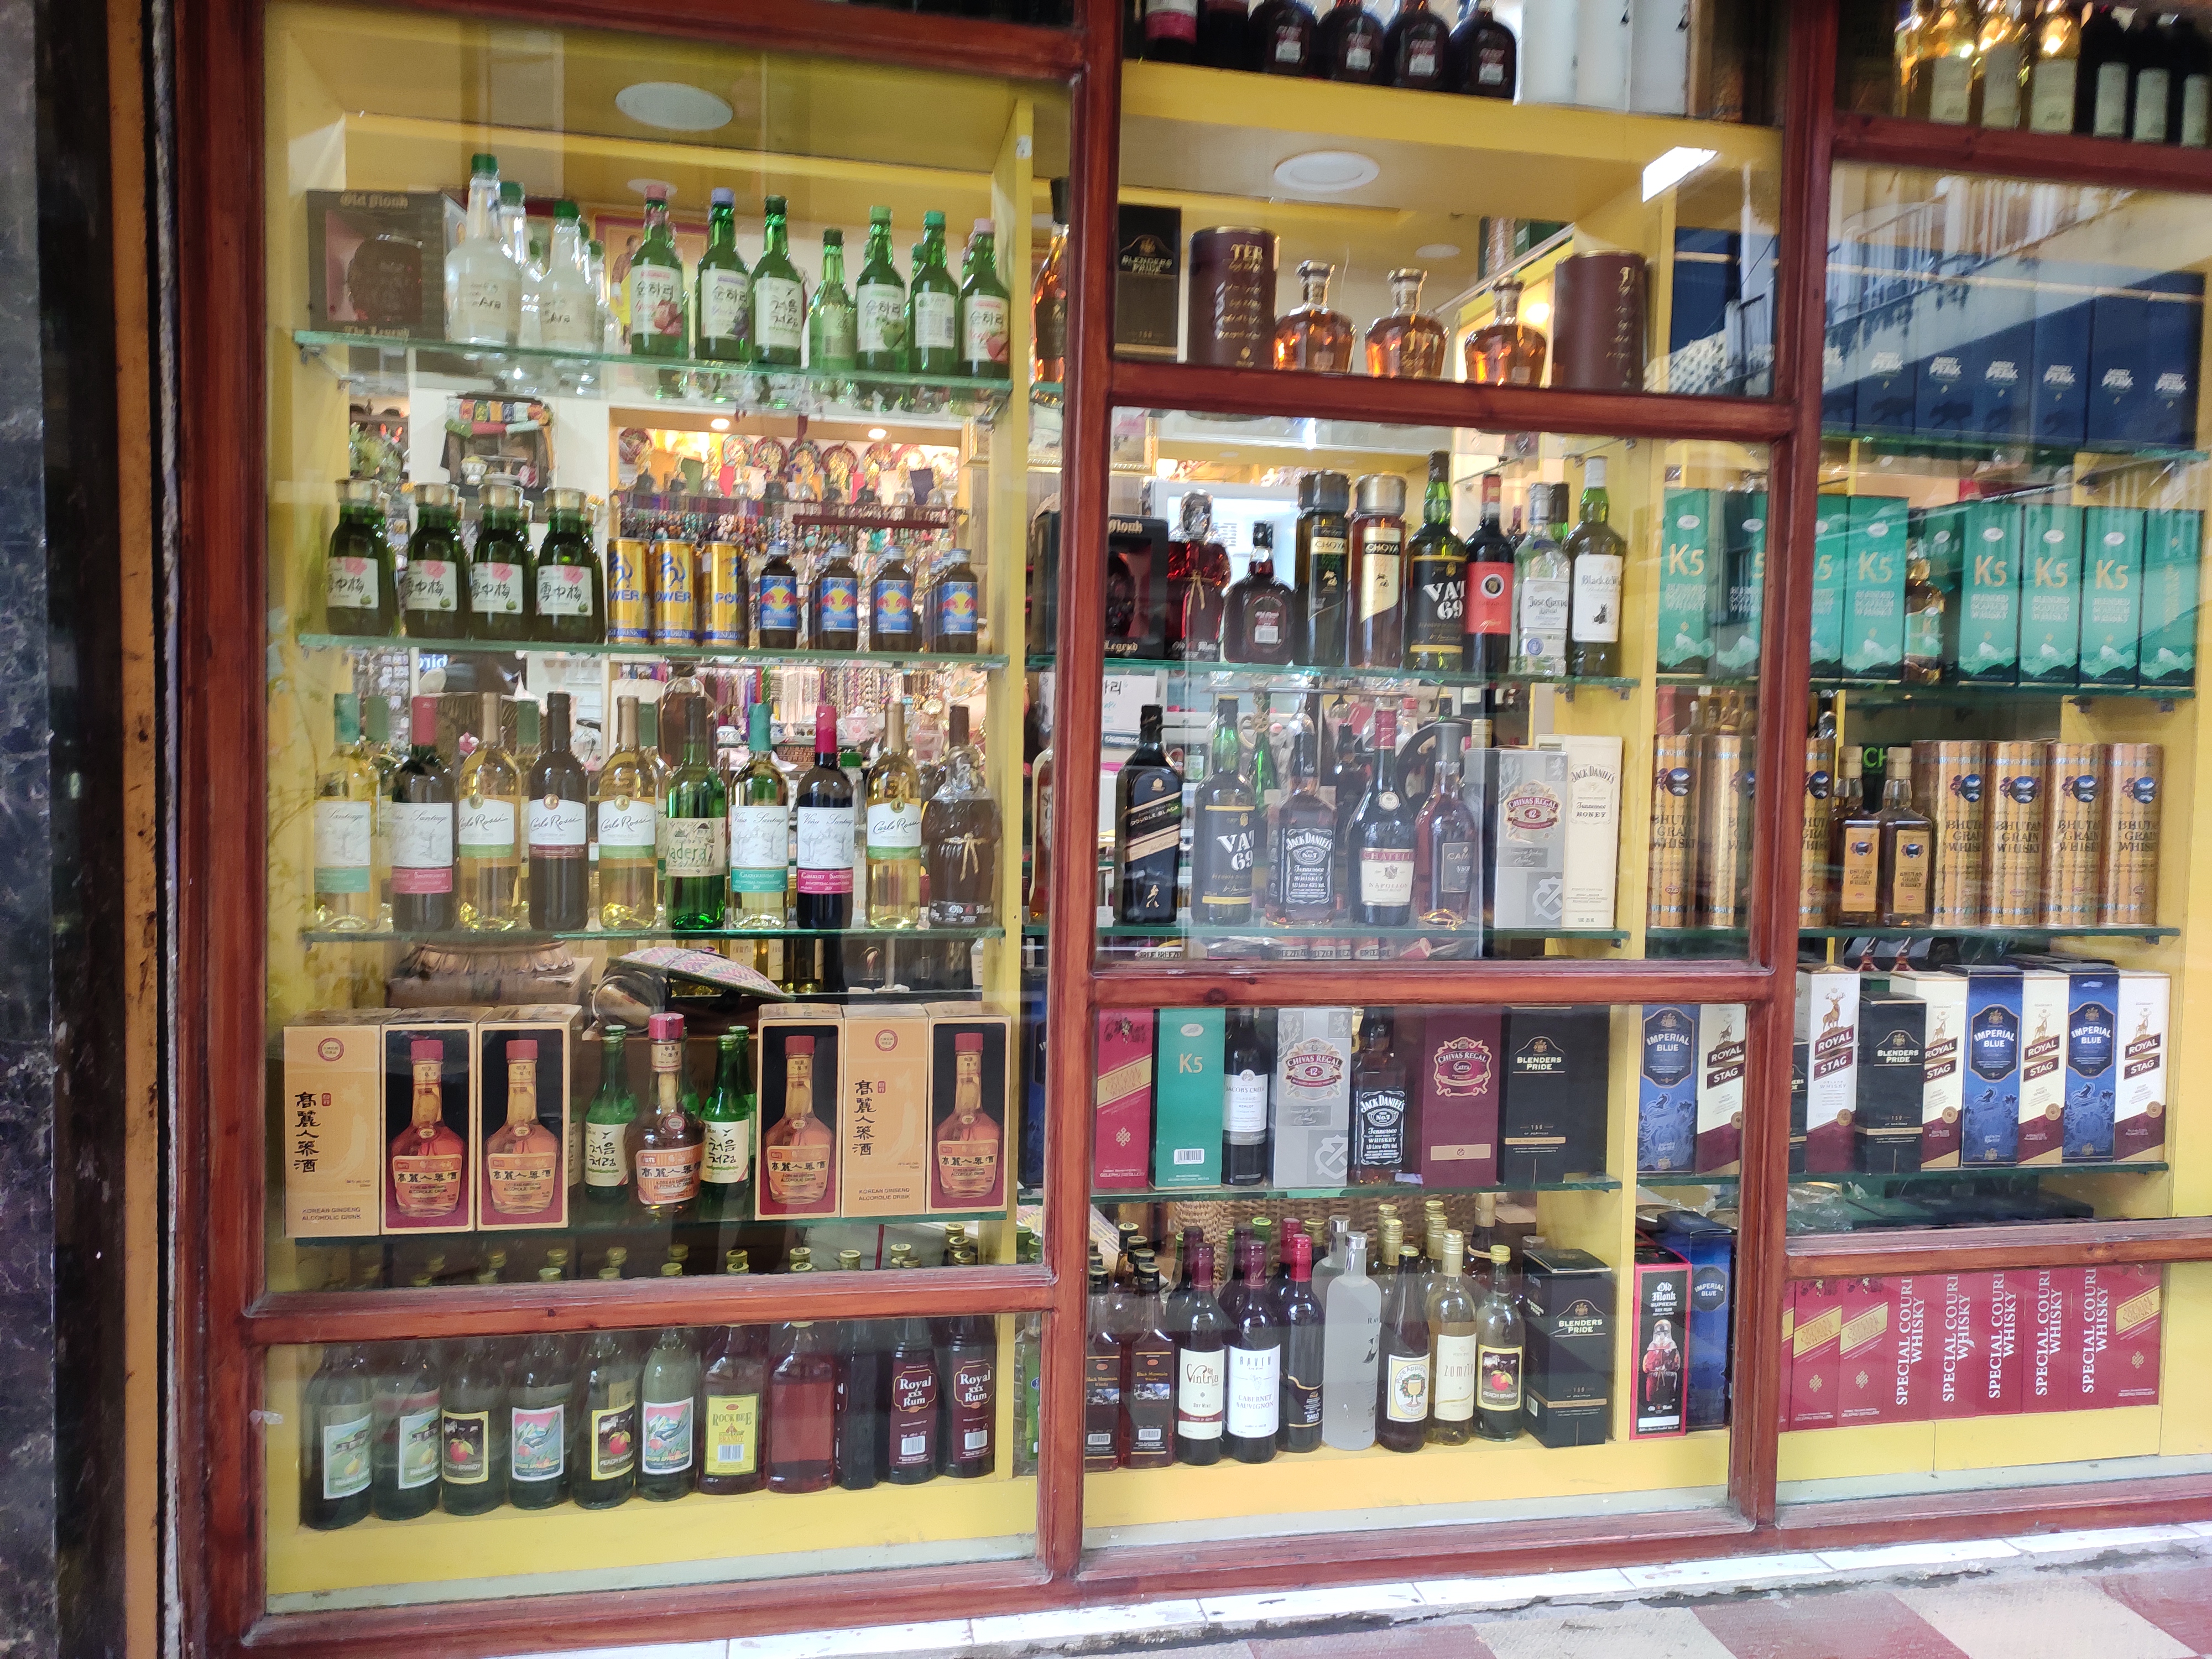 Liquor show case in a super market